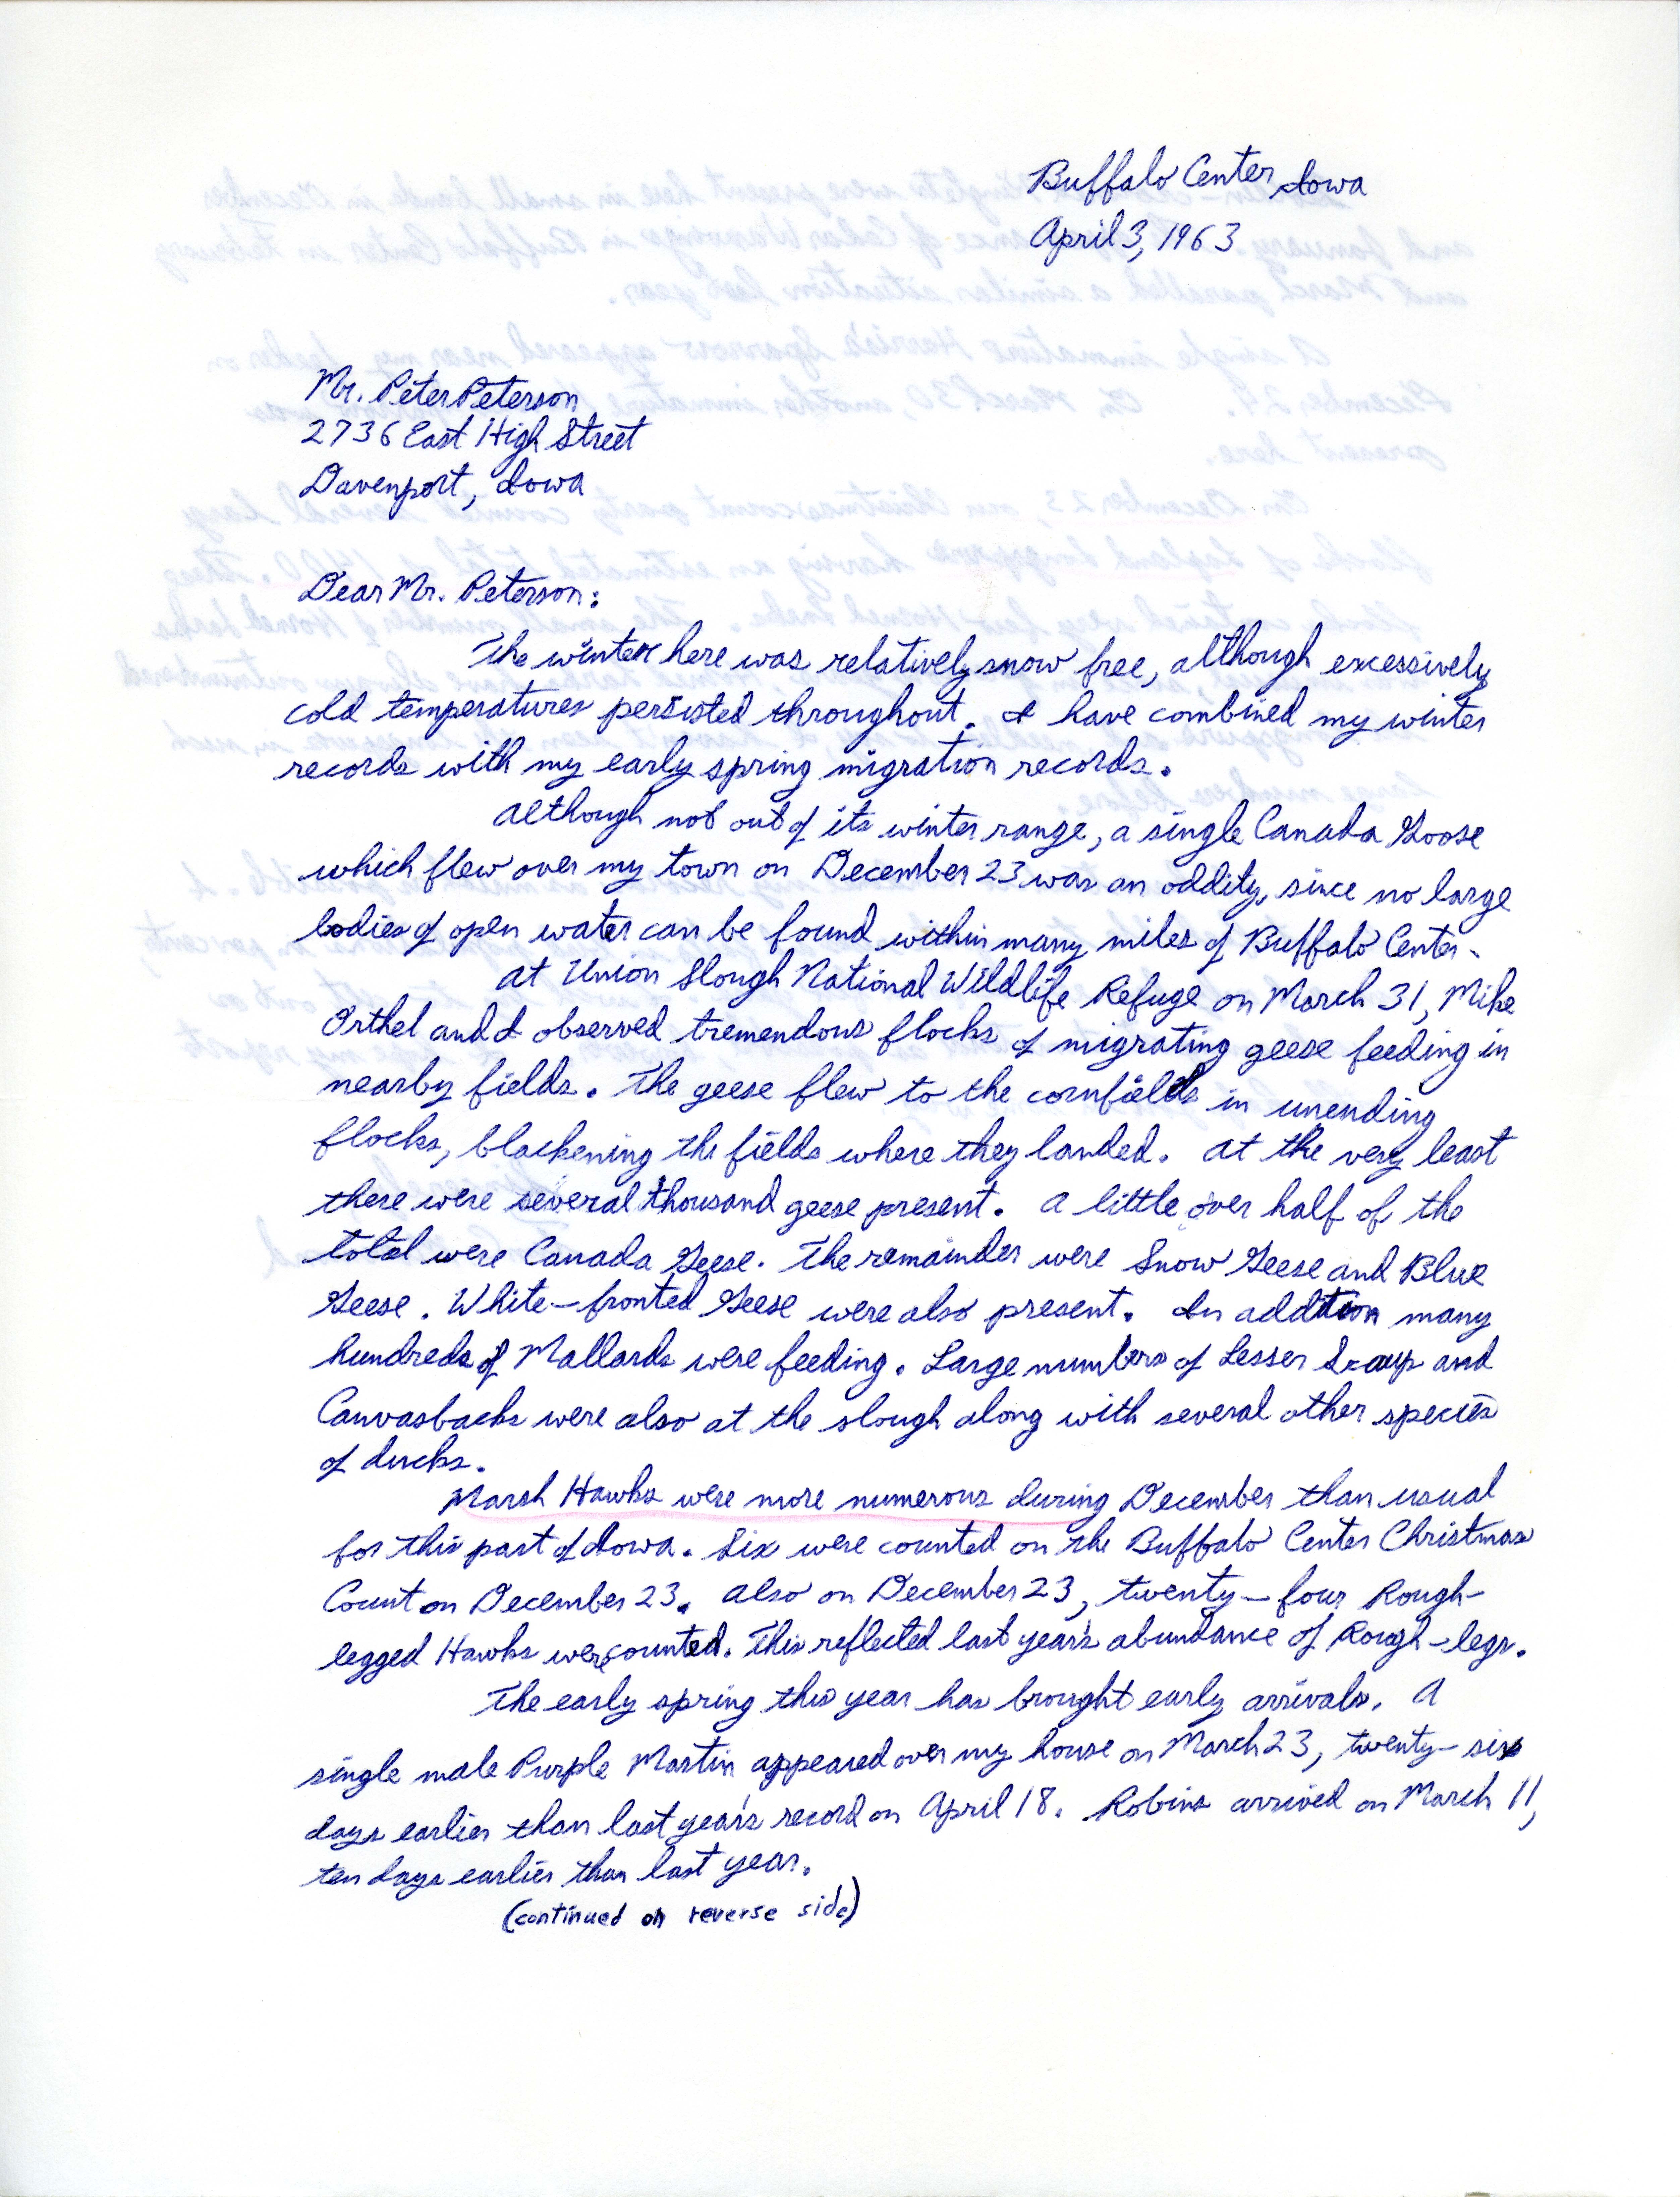 Tim C. Moermond letter to Peter C. Petersen regarding field notes, winter 1963